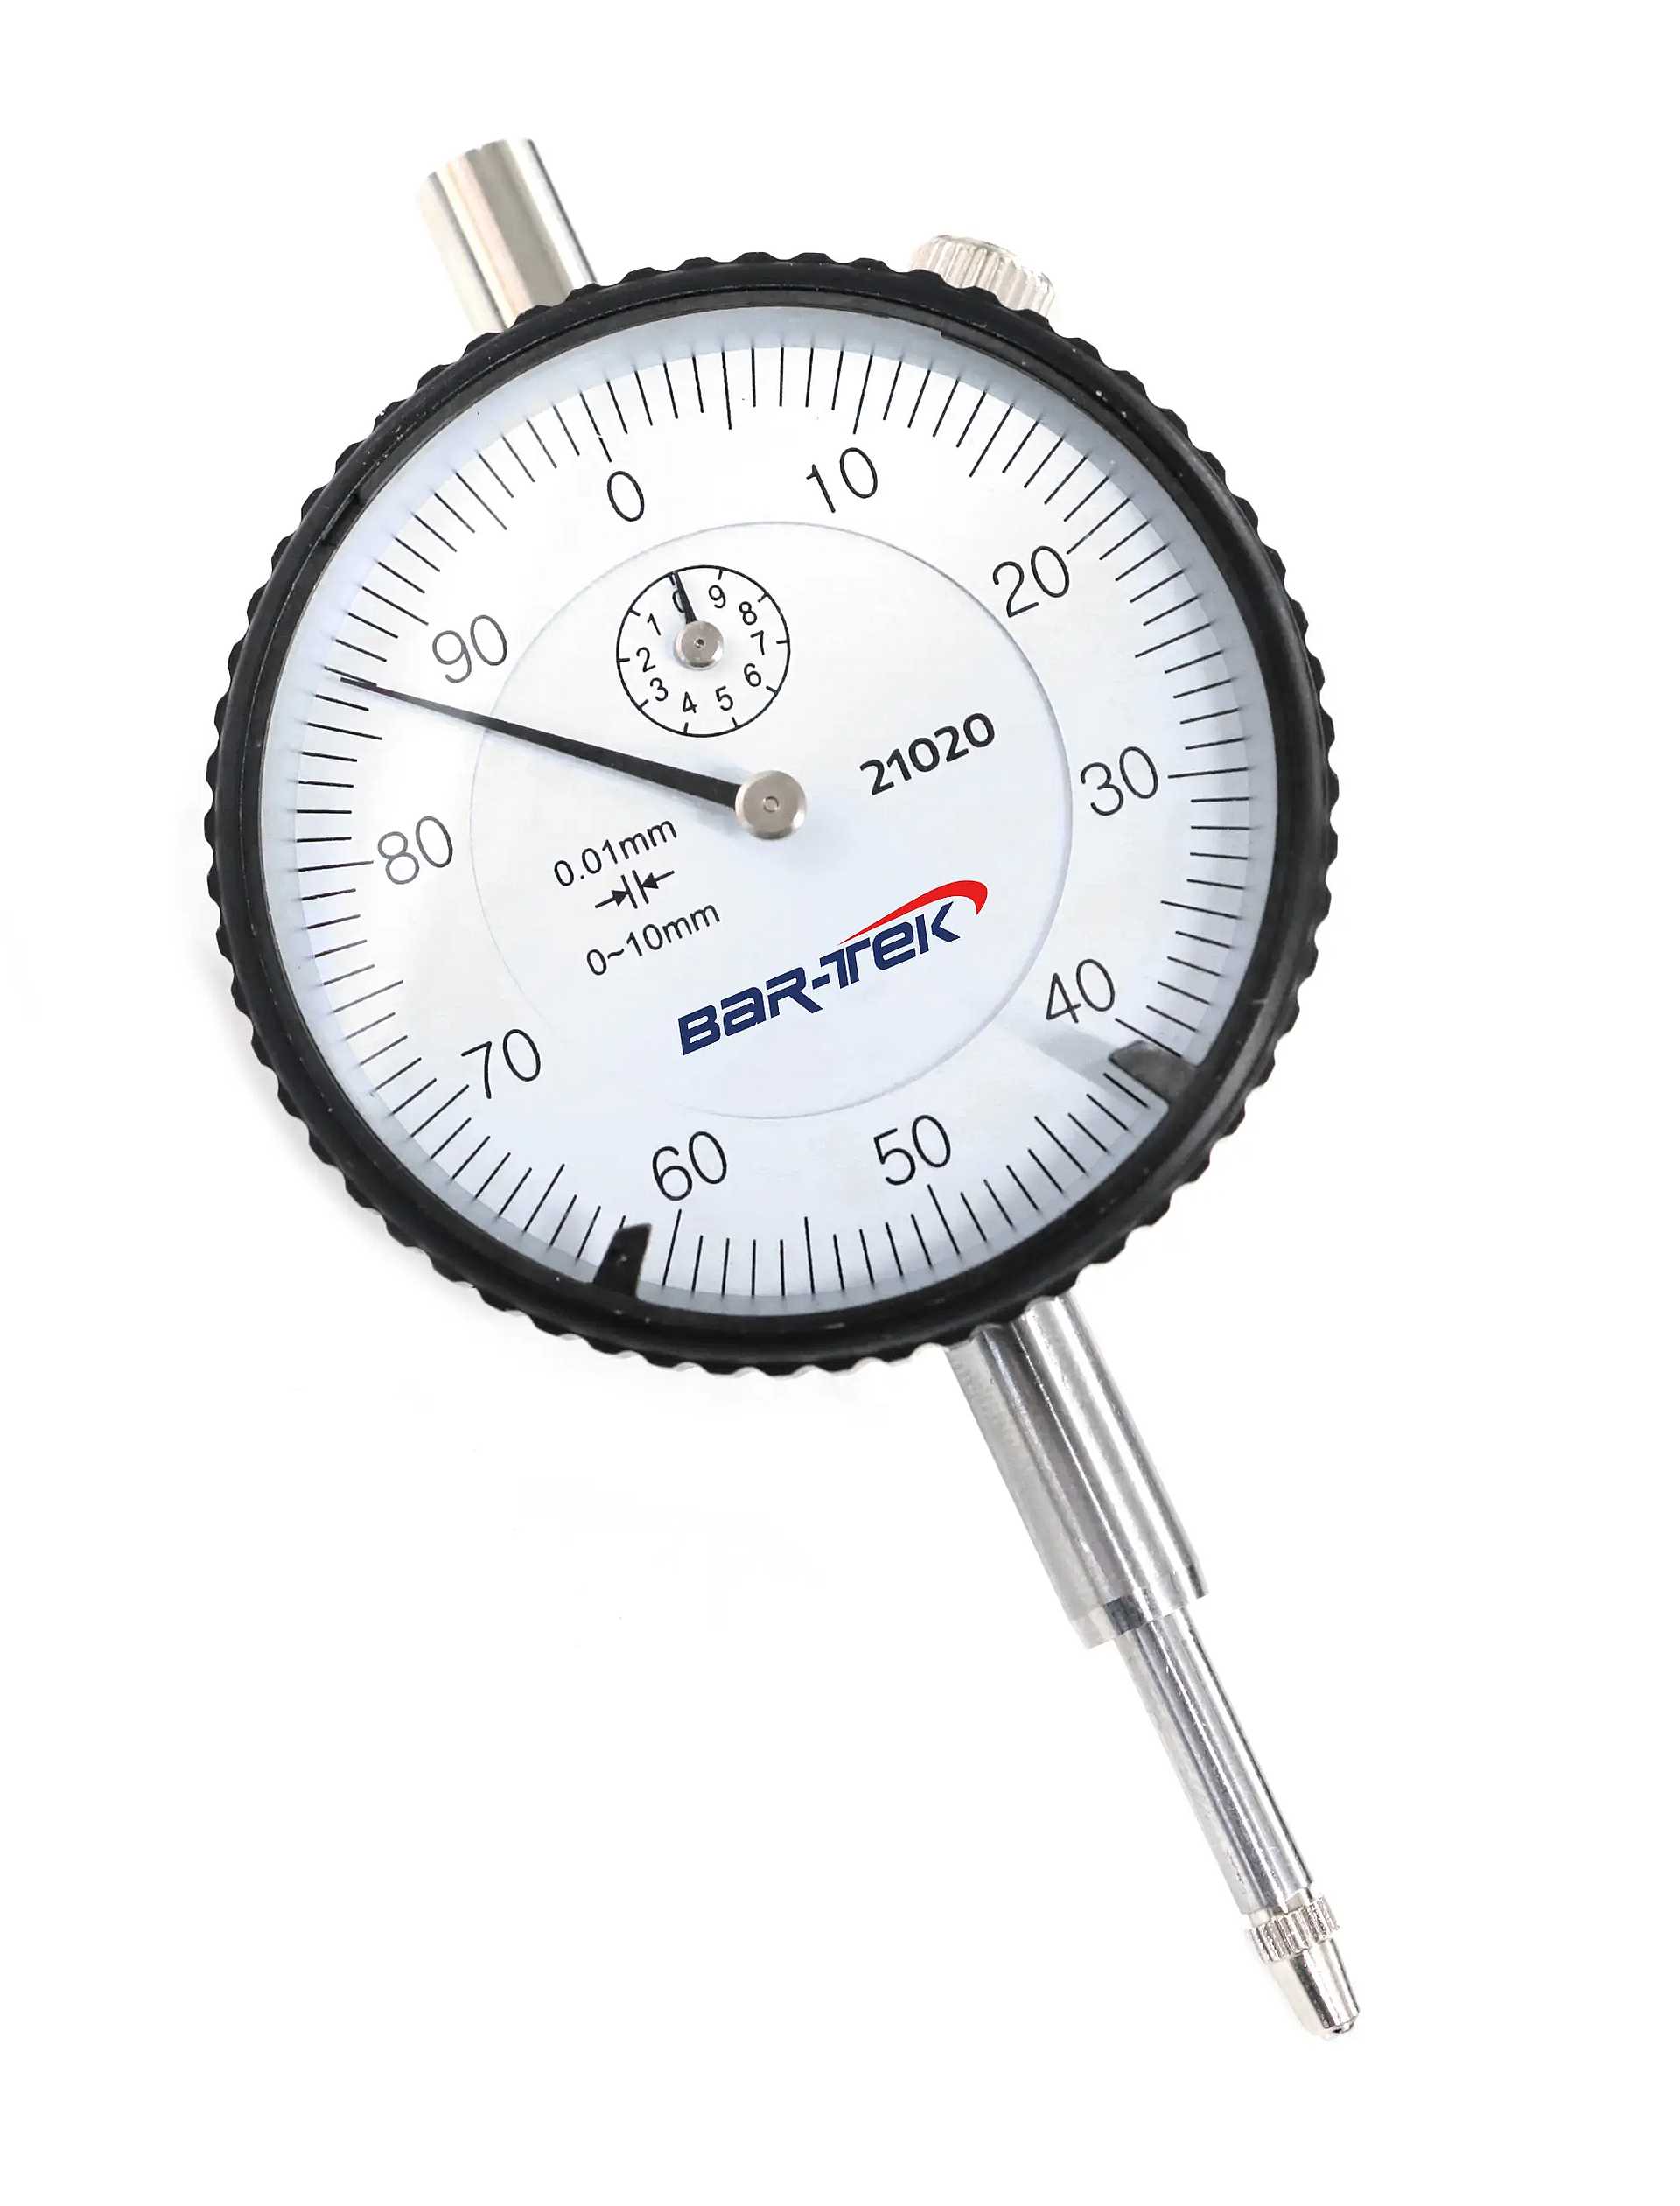 Precision dial gauge 10mm, outer diameter 60mm